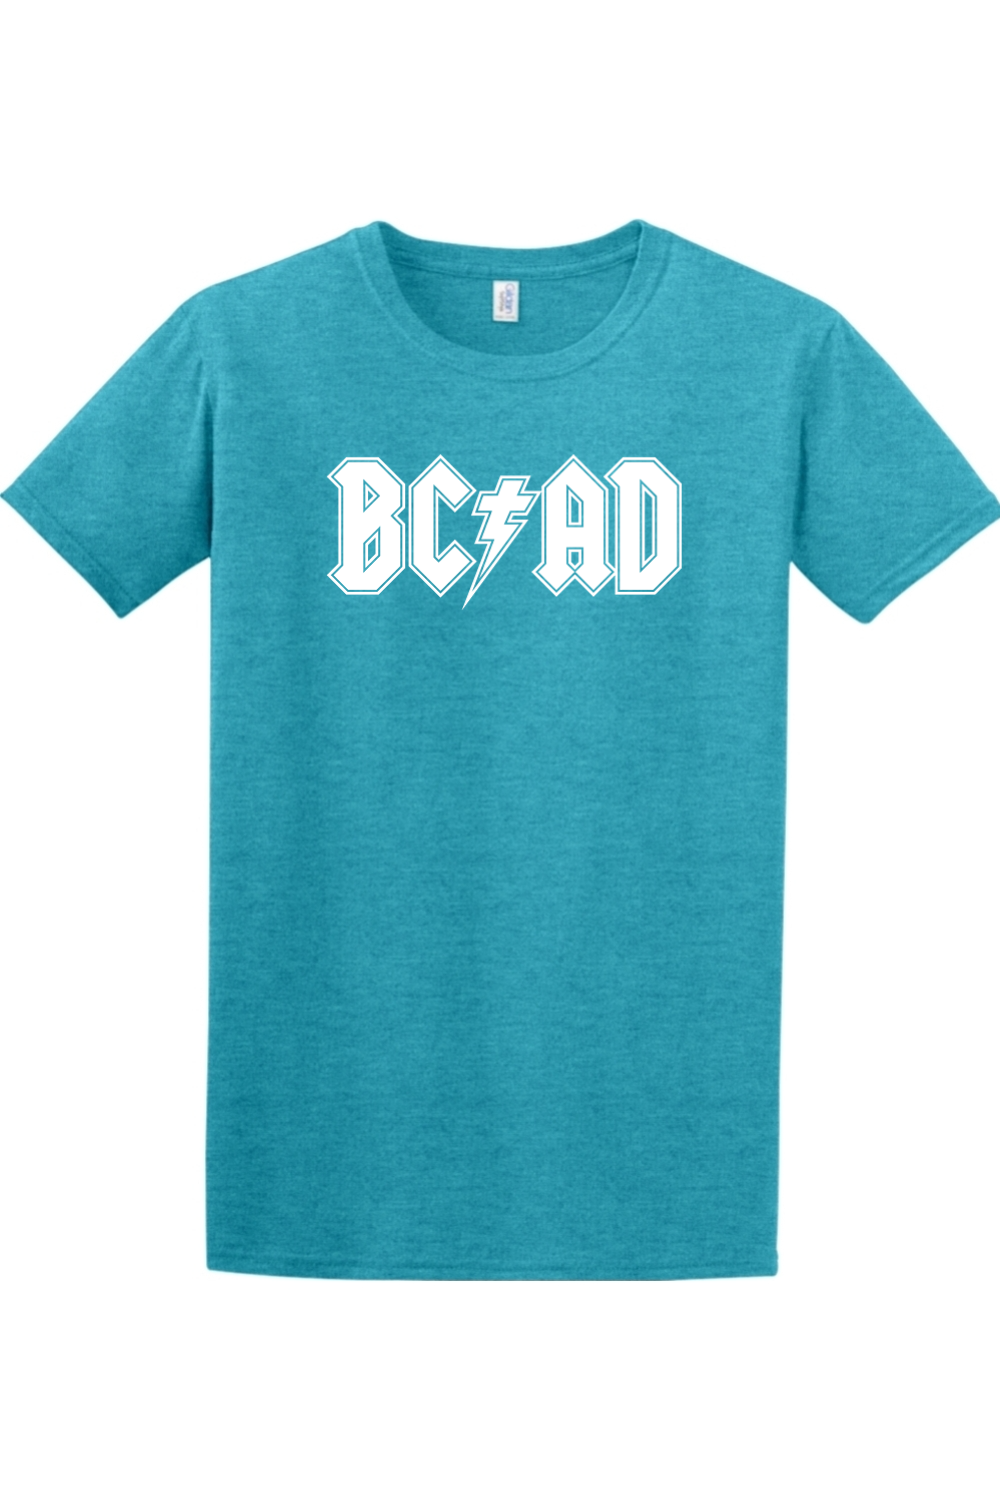 BCAD Adult T-Shirt